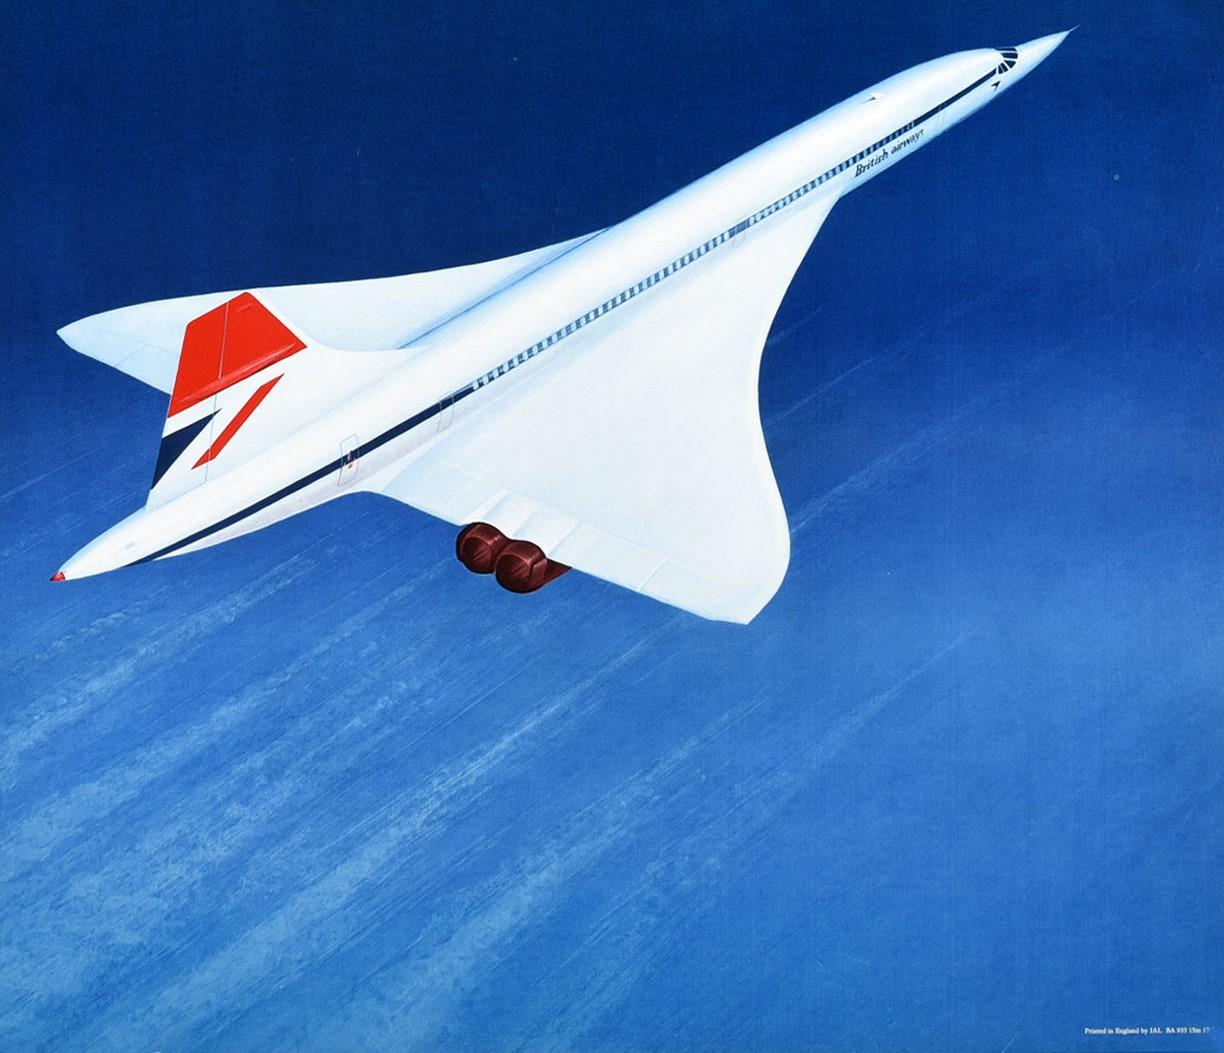 Design Aviation Engineering British Airways Travel Print Concorde Air France Travel Poster Concorde Print Concorde Poster